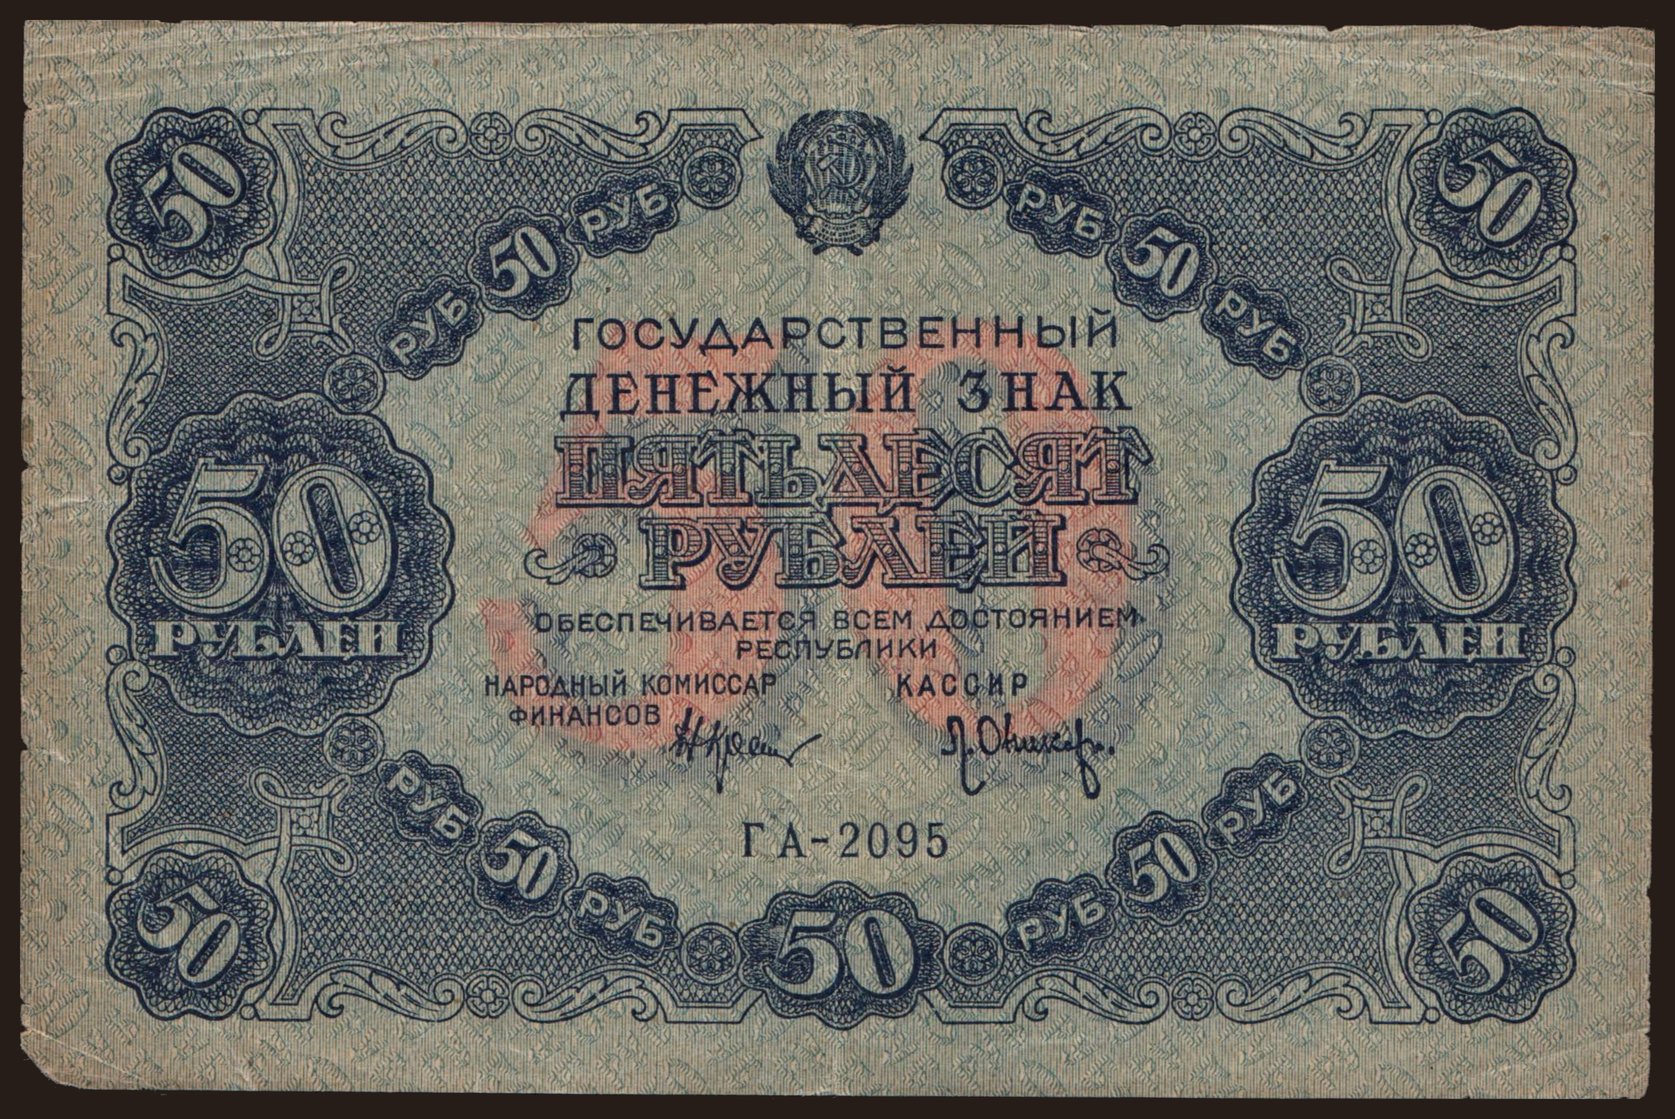 50 rubel, 1922